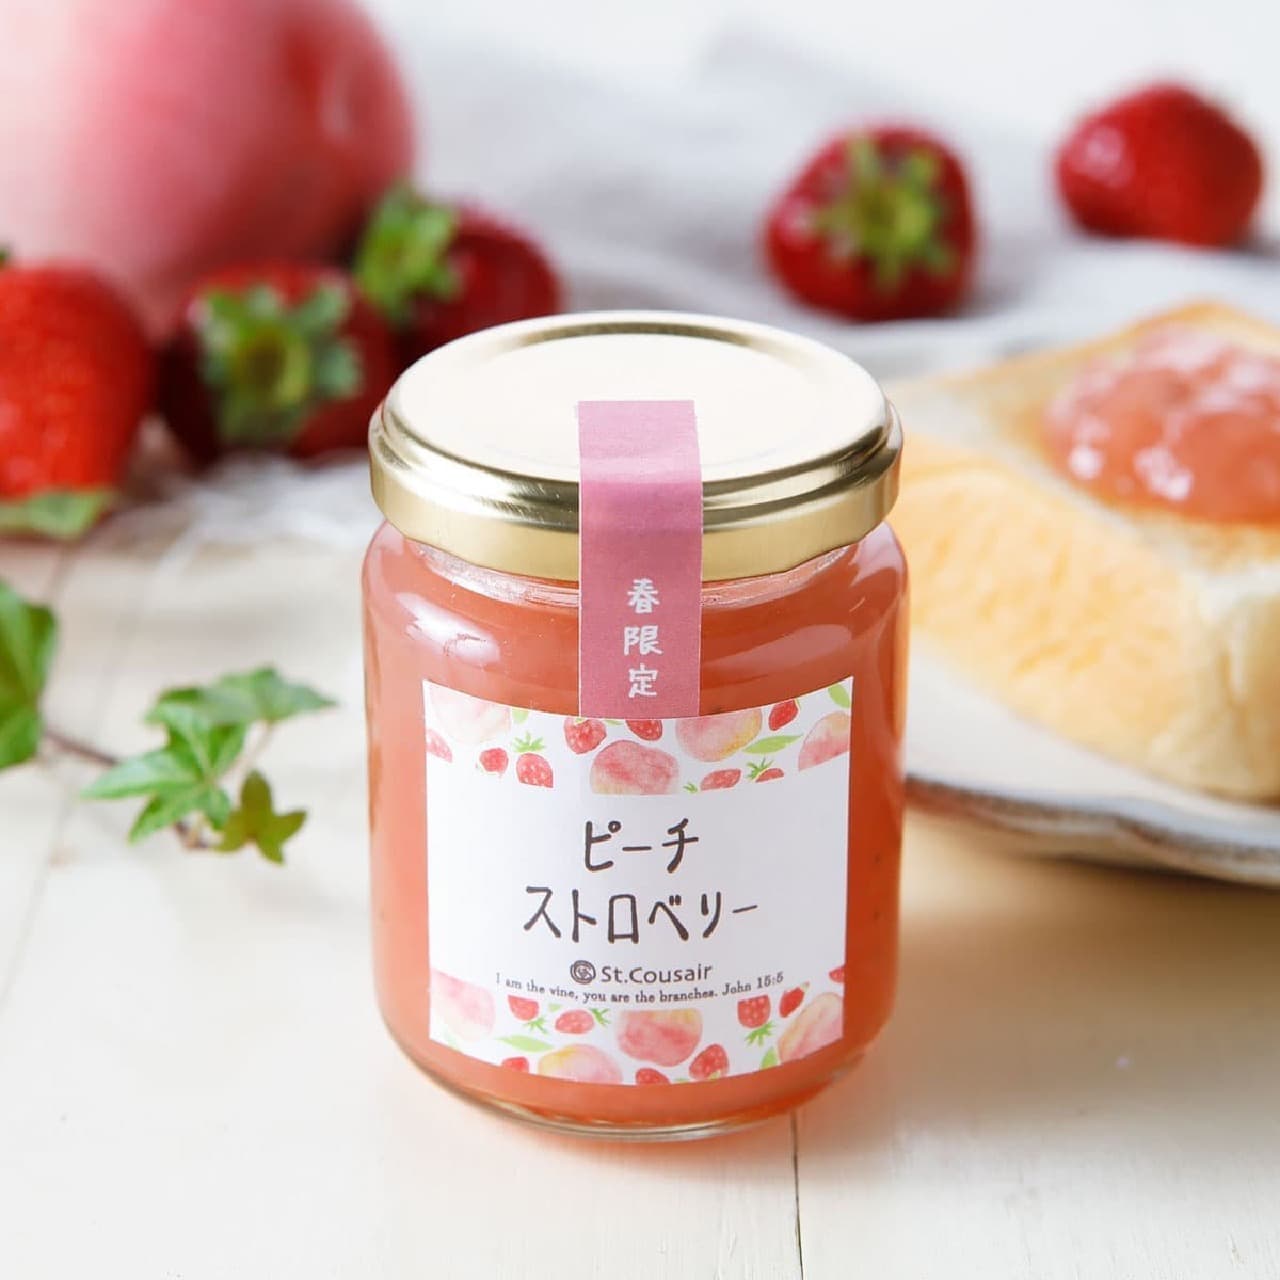 Sankuzeru Spring Limited Jam "Peach Strawberry"